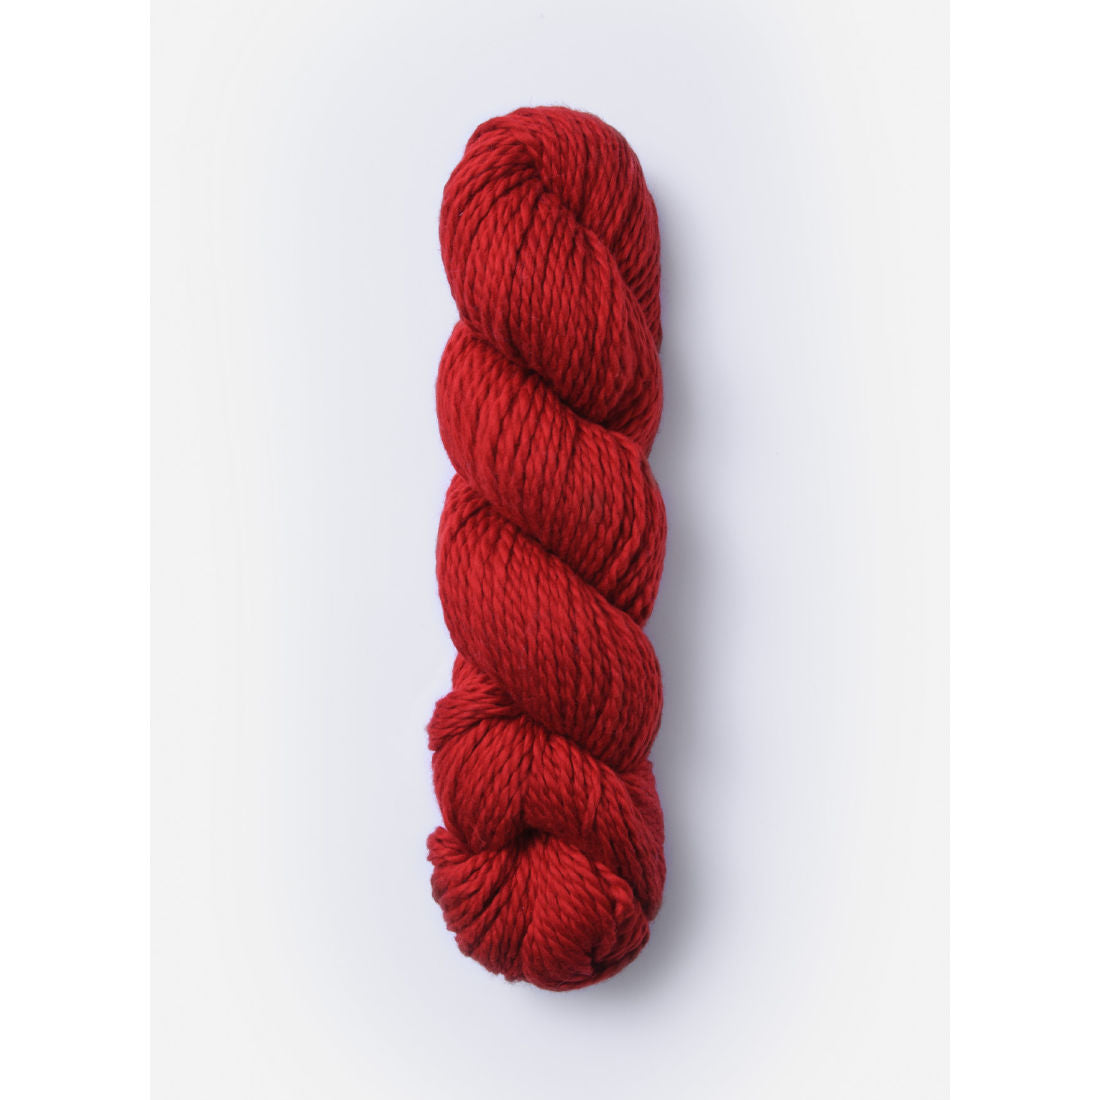 Blue Sky Fibers organic cotton worsted yarn in true red